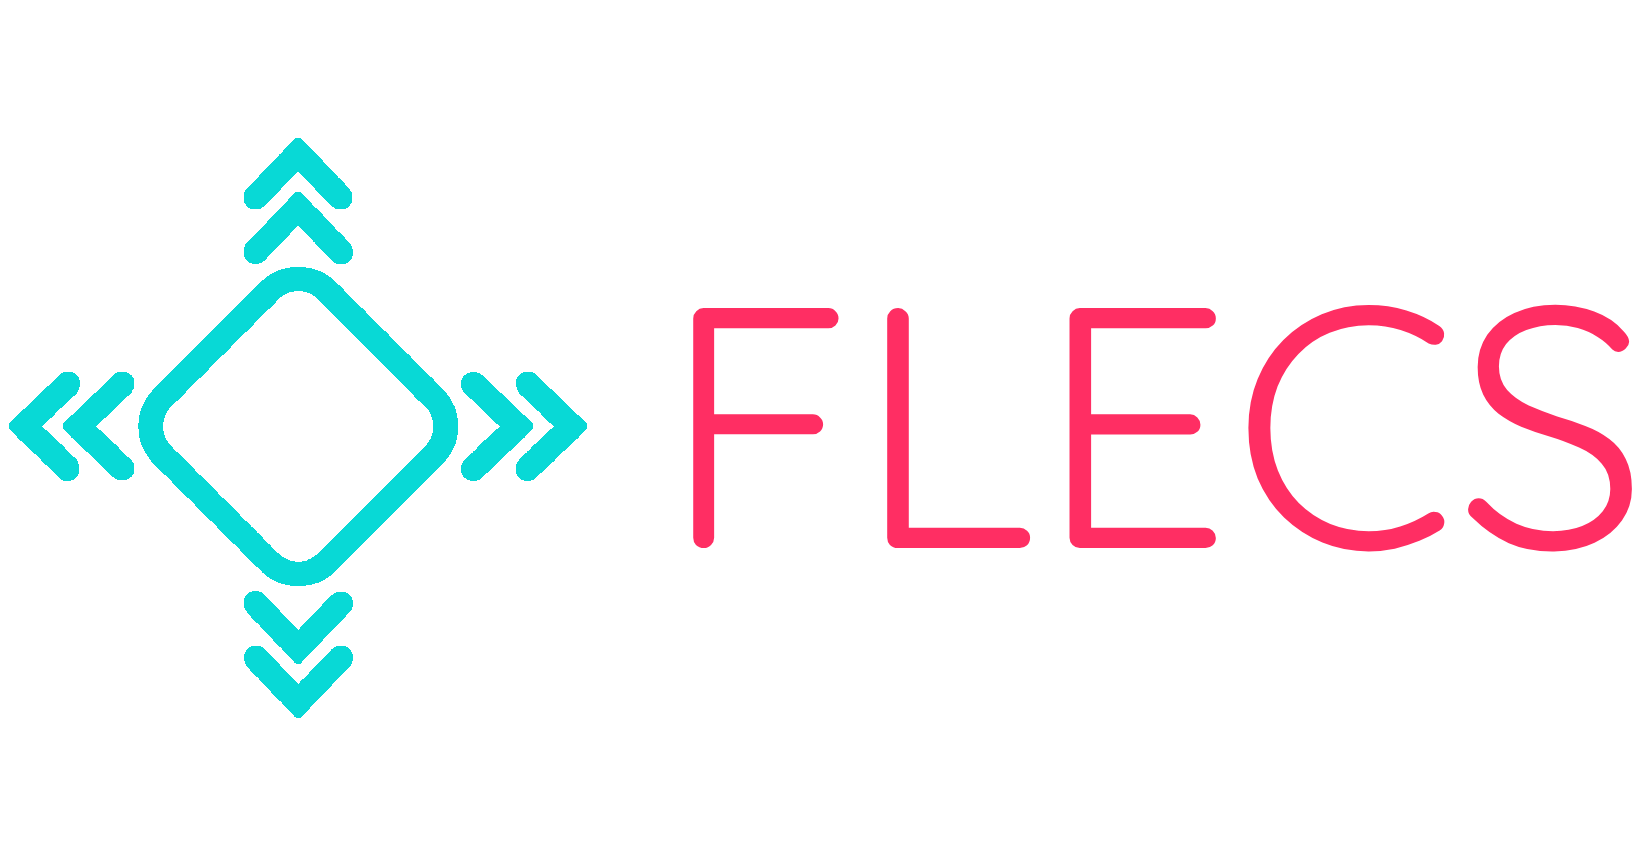 FLECS opens the market for INOSOFT - FLECS